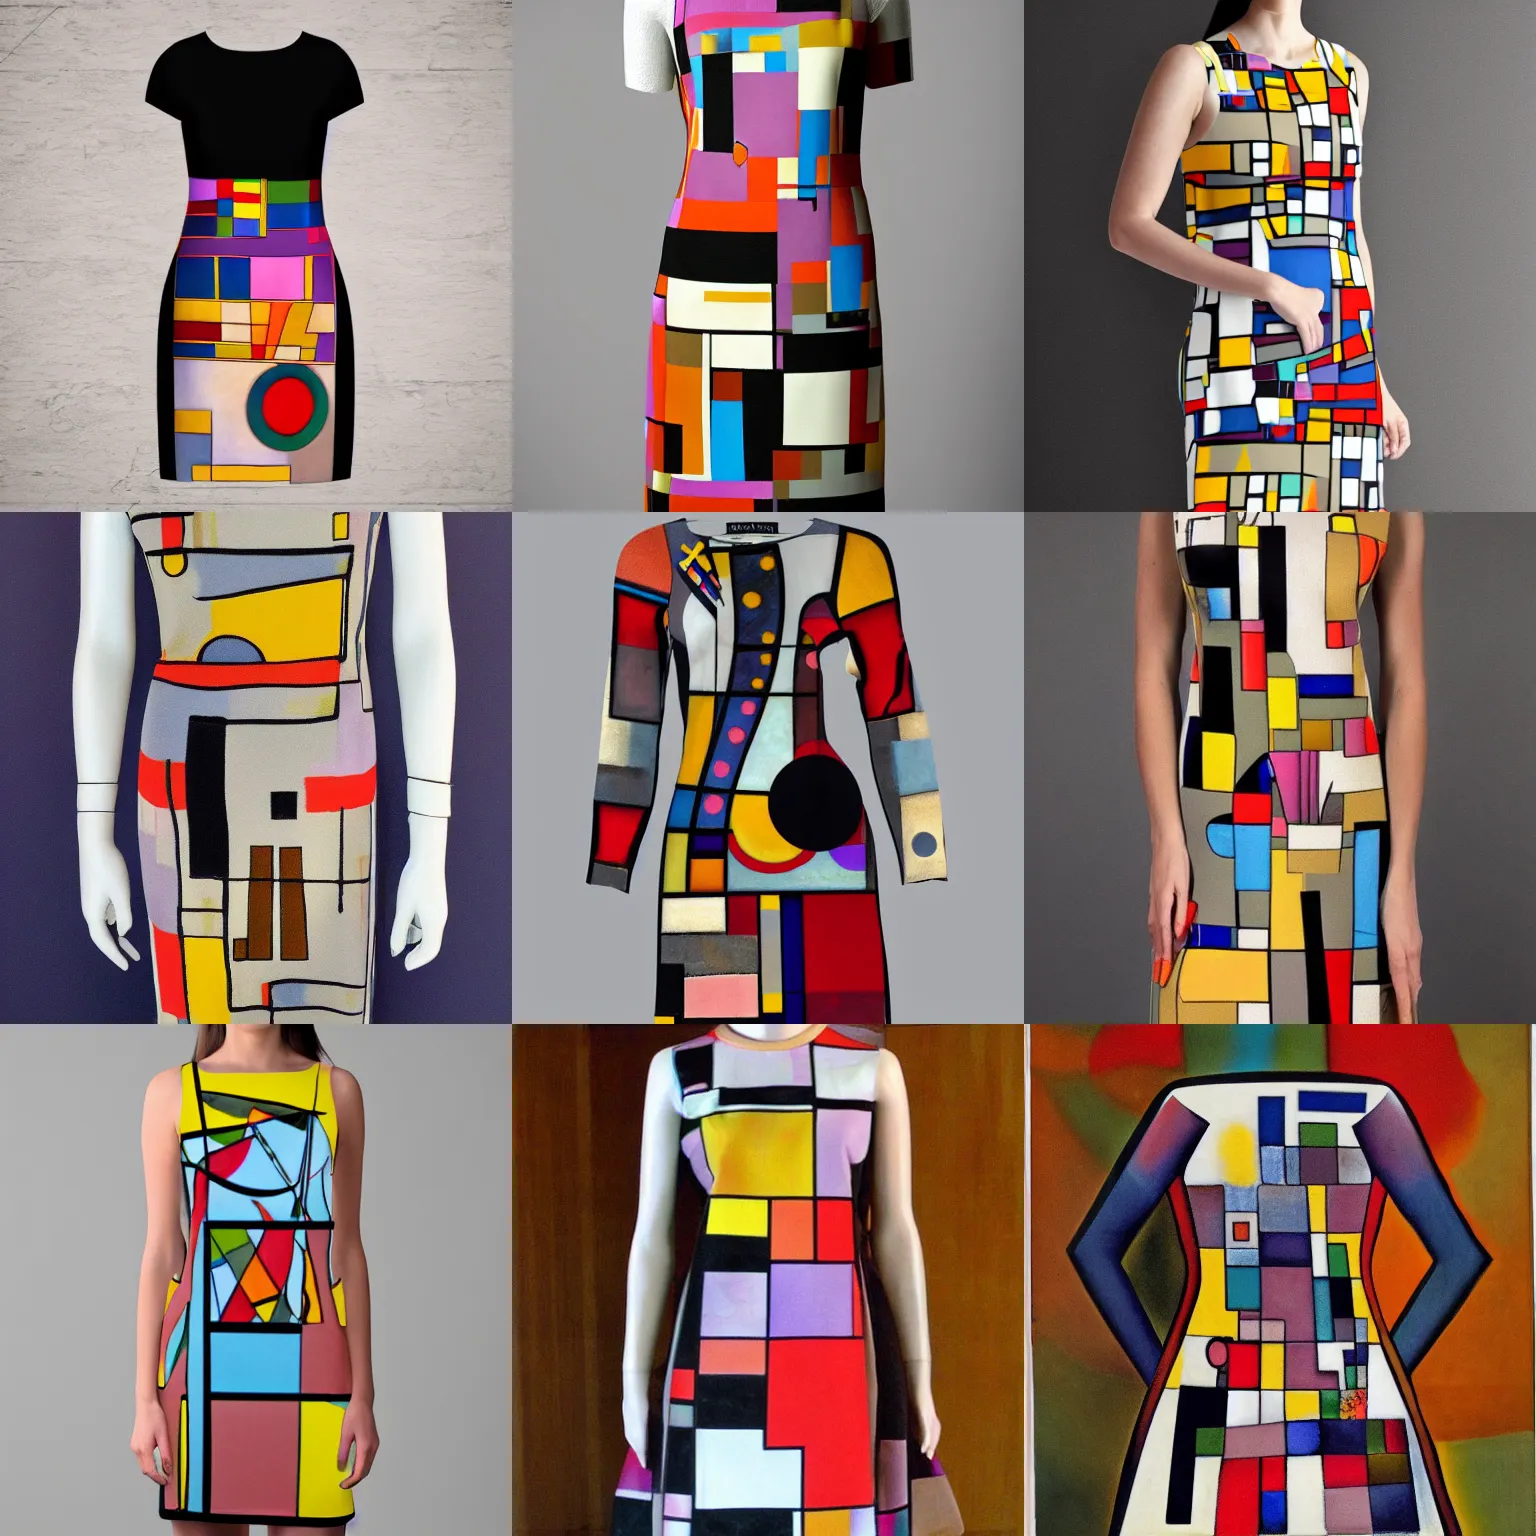 Prompt: kandinsky pollock mondrian abstract art dress, muted colors